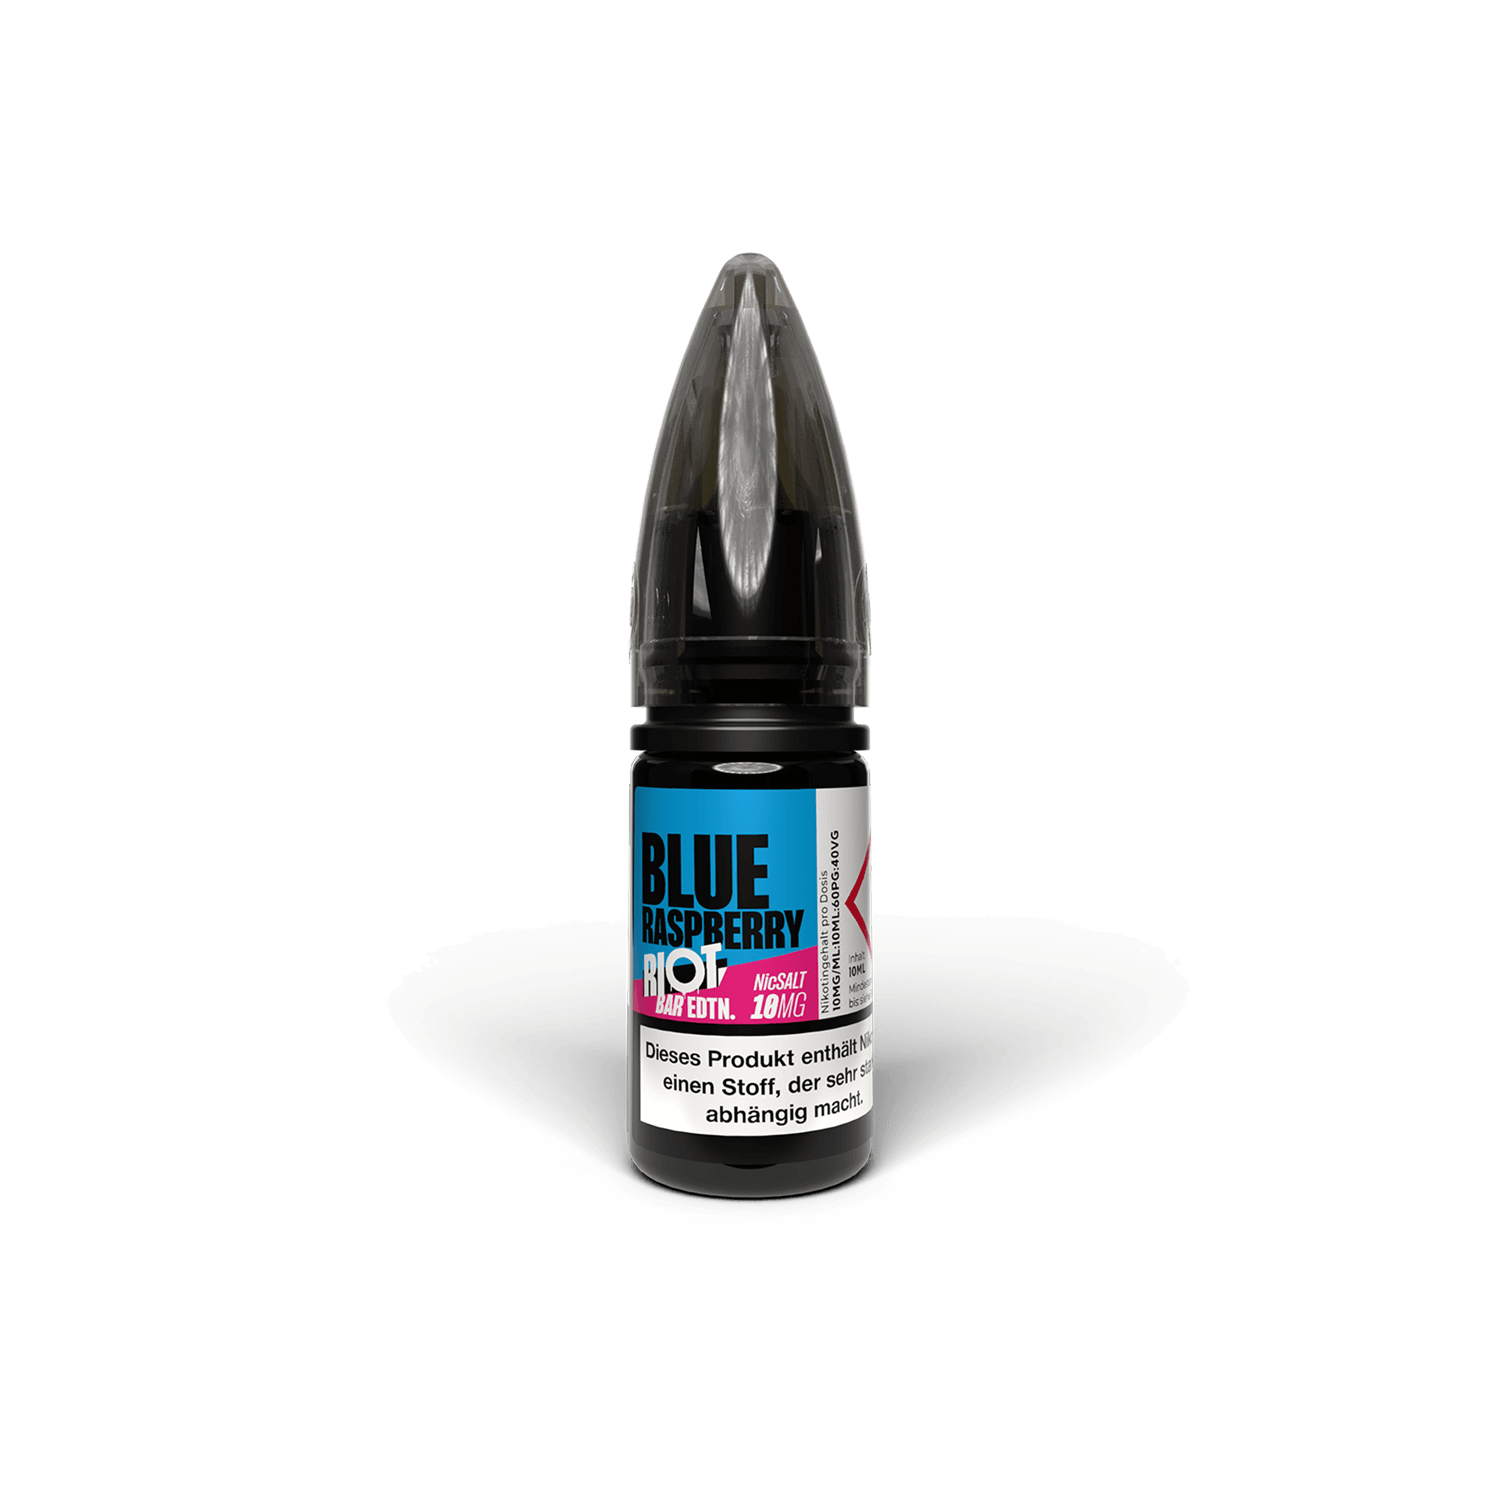 Riot Squad - BAR EDTN - Blue Raspberry 10 ml Liquid